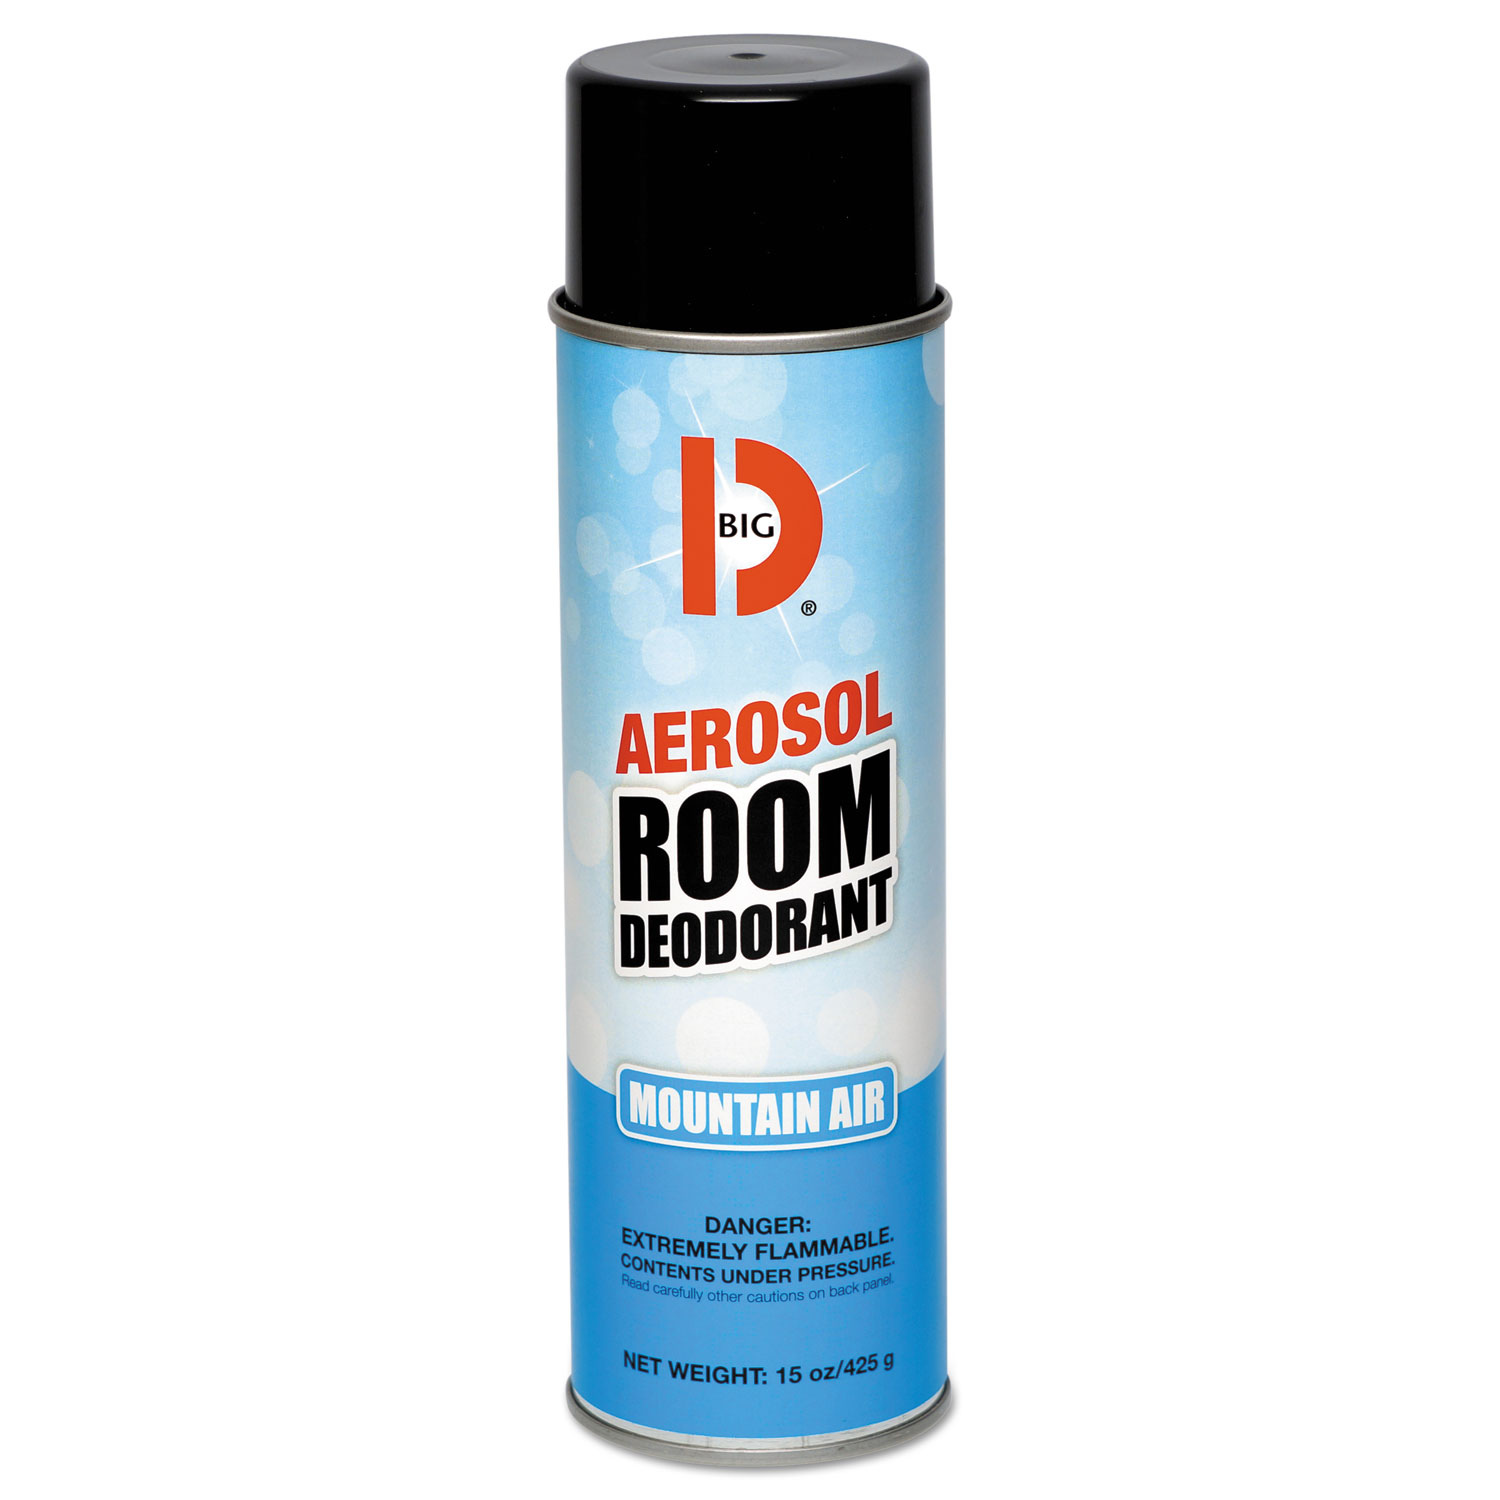  Big D Industries 042600 Aerosol Room Deodorant, Mountain Air Scent, 15 oz Can, 12/Box (BGD426) 